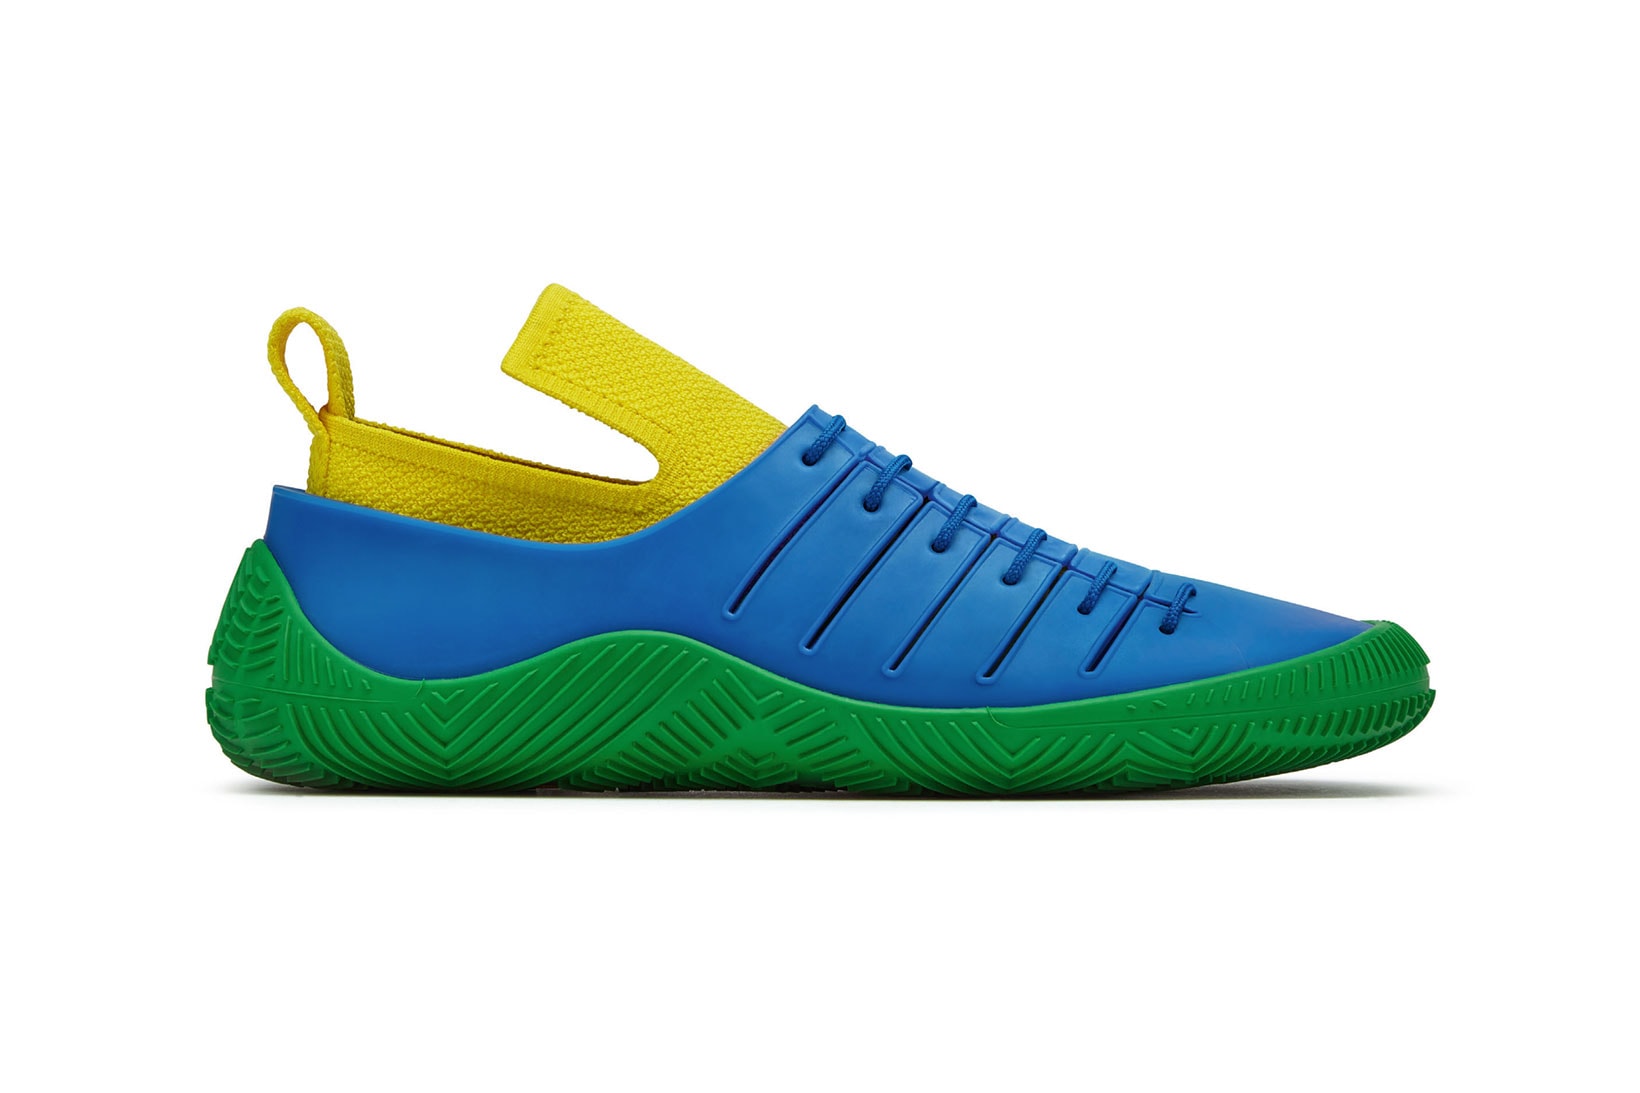 bottega veneta salon 01 footwear collection daniel lee barefoot second skin green blue yellow